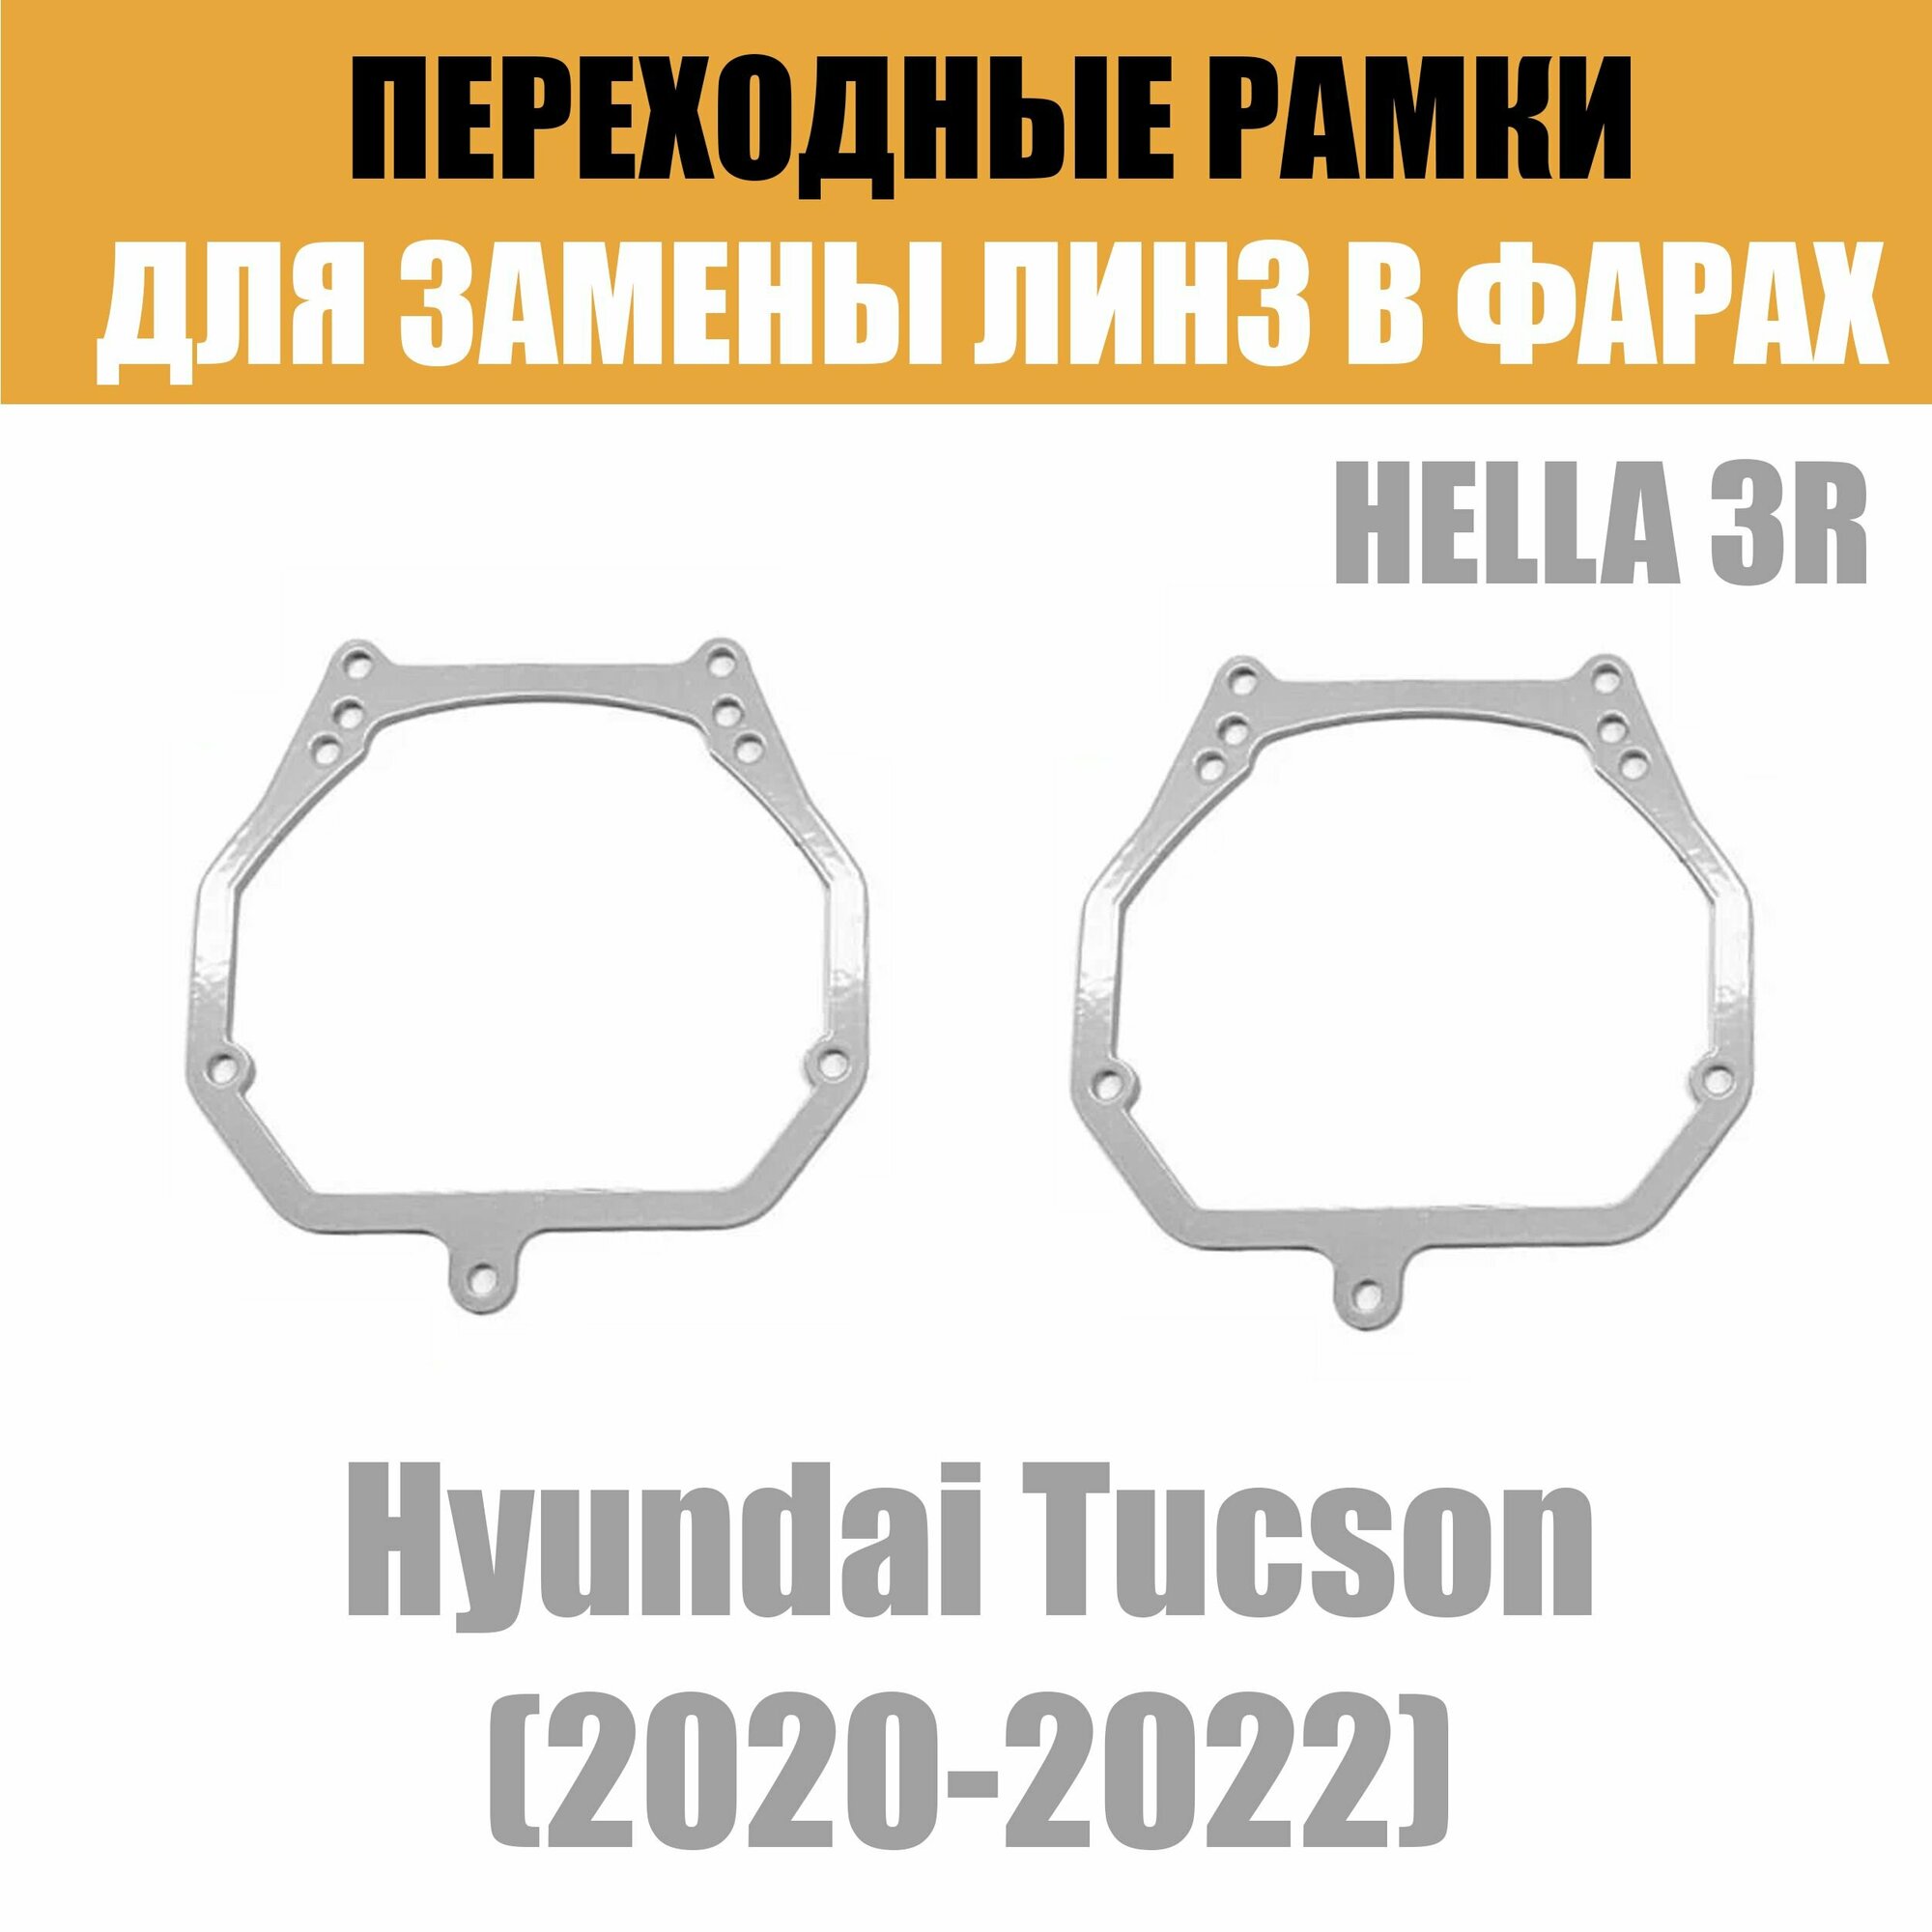 Переходные рамки для линз №2 на Hyundai Tucson (2020-2022) под модуль Hella 3R/Hella 3 (Комплект, 2шт)